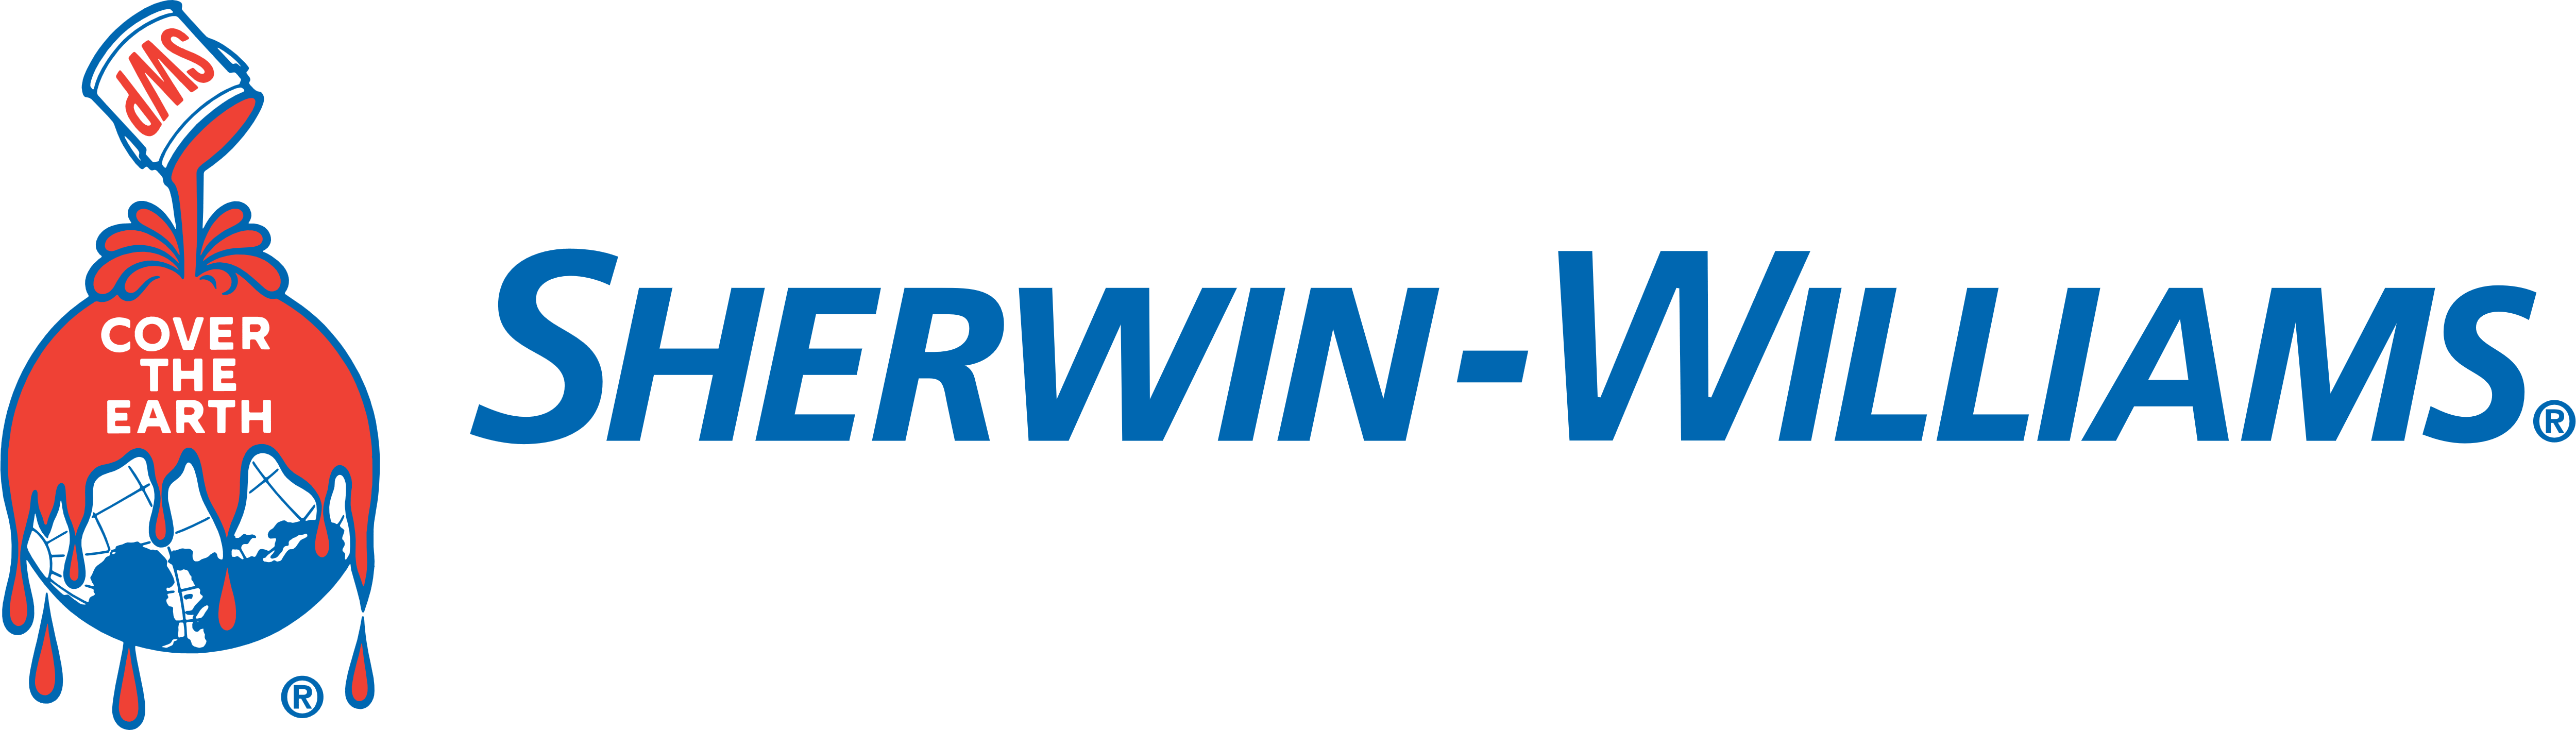 Sherwin-Williams_logo_wordmark